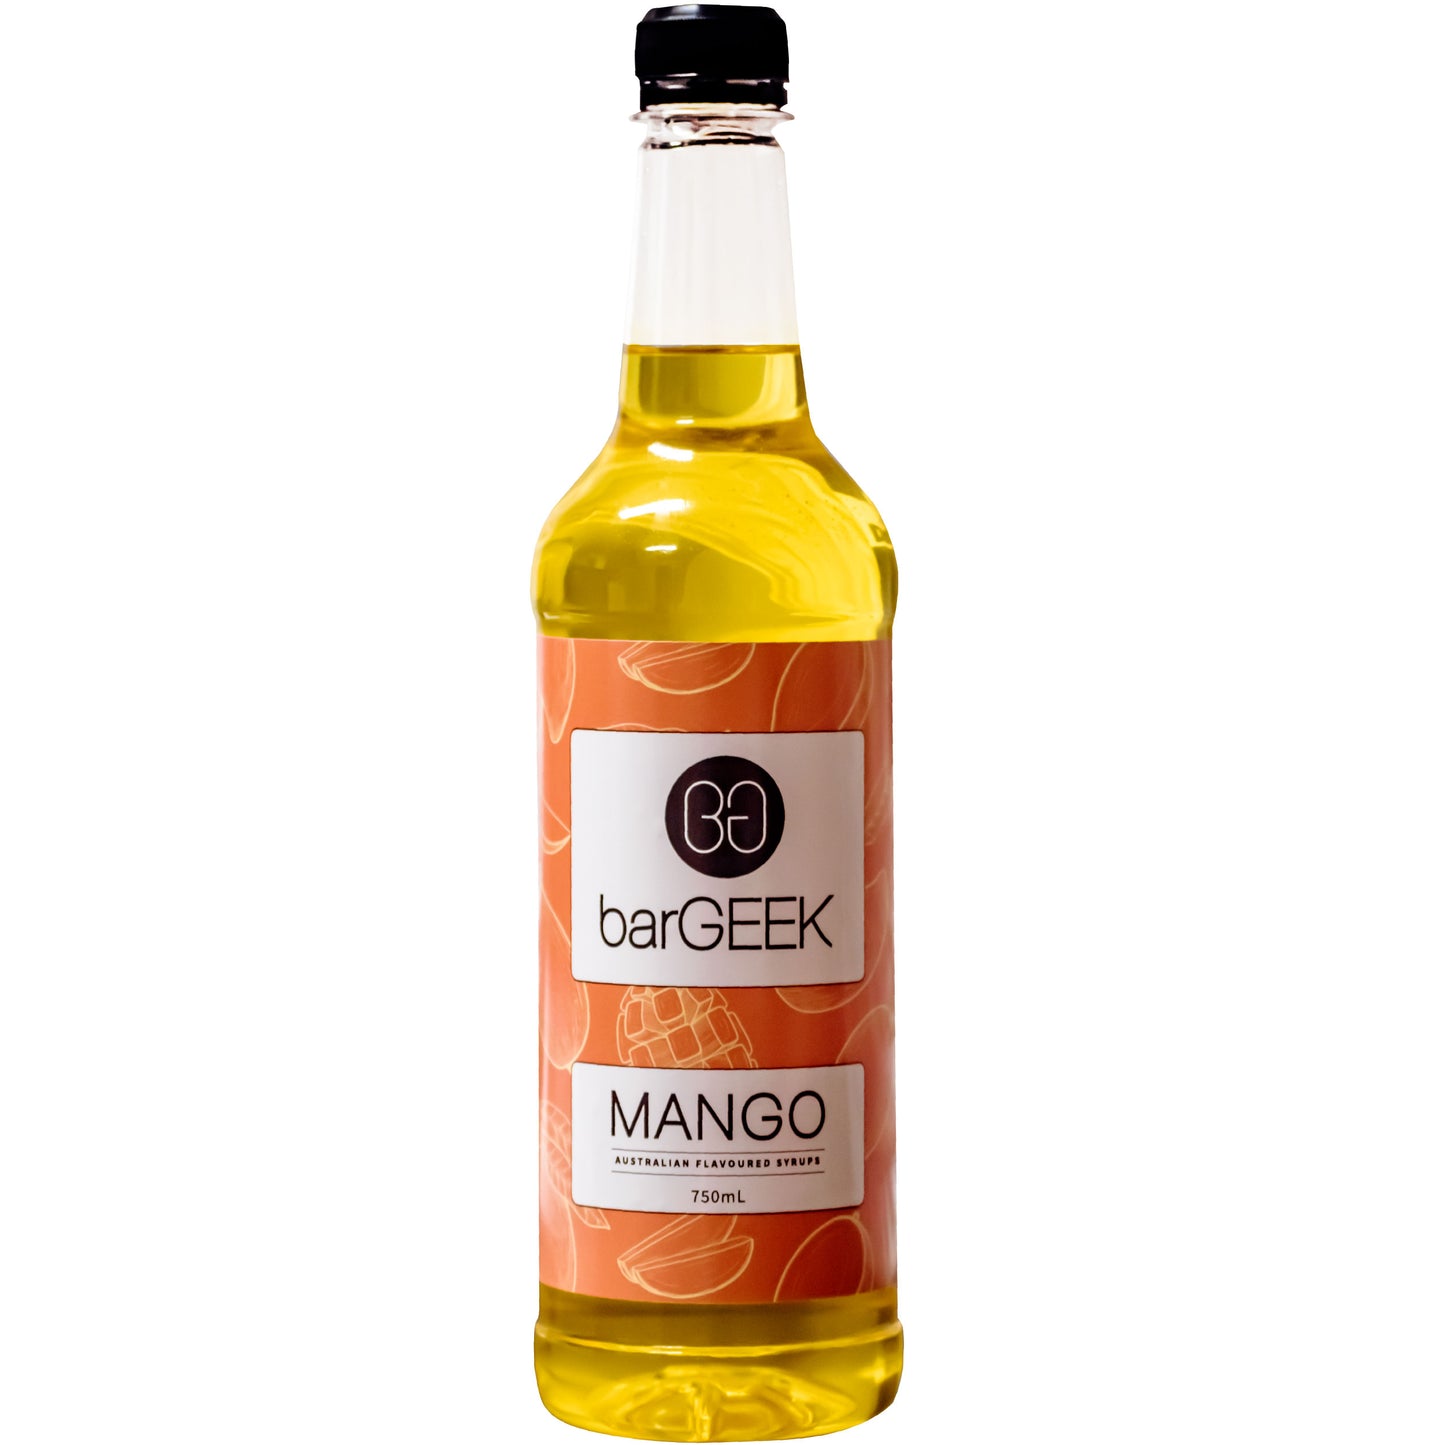 barGEEK Syrups Mango 750ml